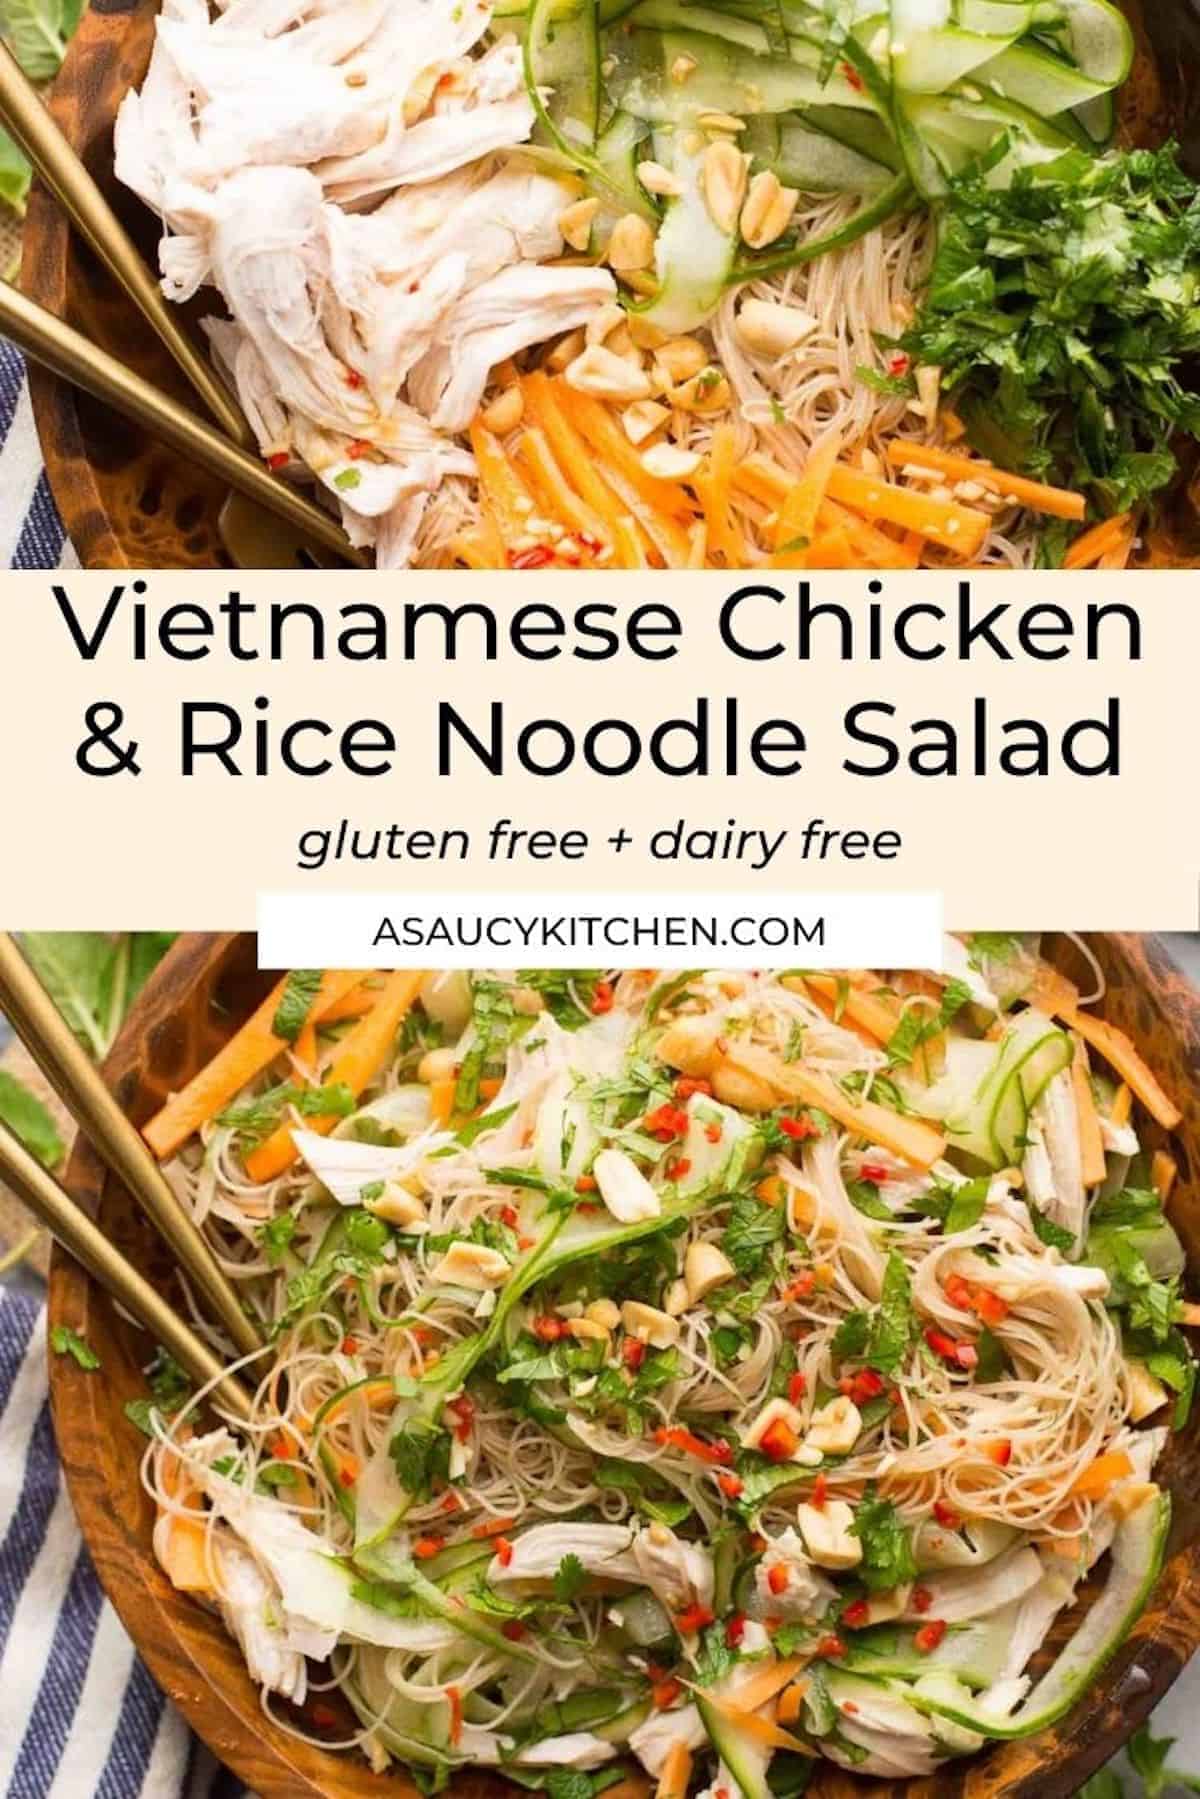 Vietnamese Chicken & Rice Noodle Salad 2021